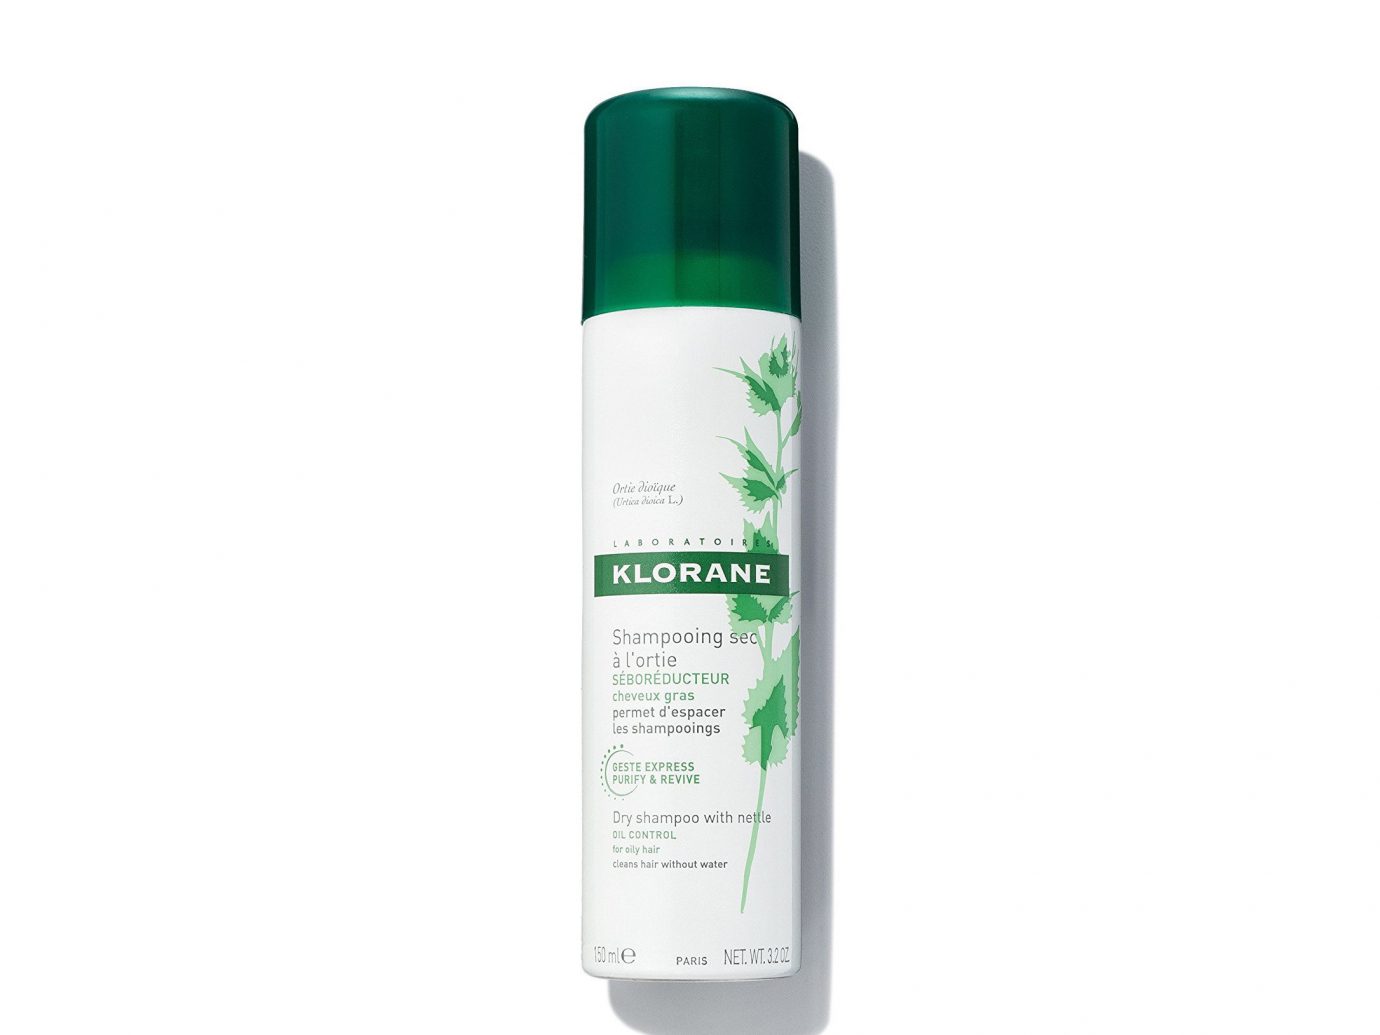 Beauty Health + Wellness Travel Shop toiletry product lotion health & beauty skin care liquid spray